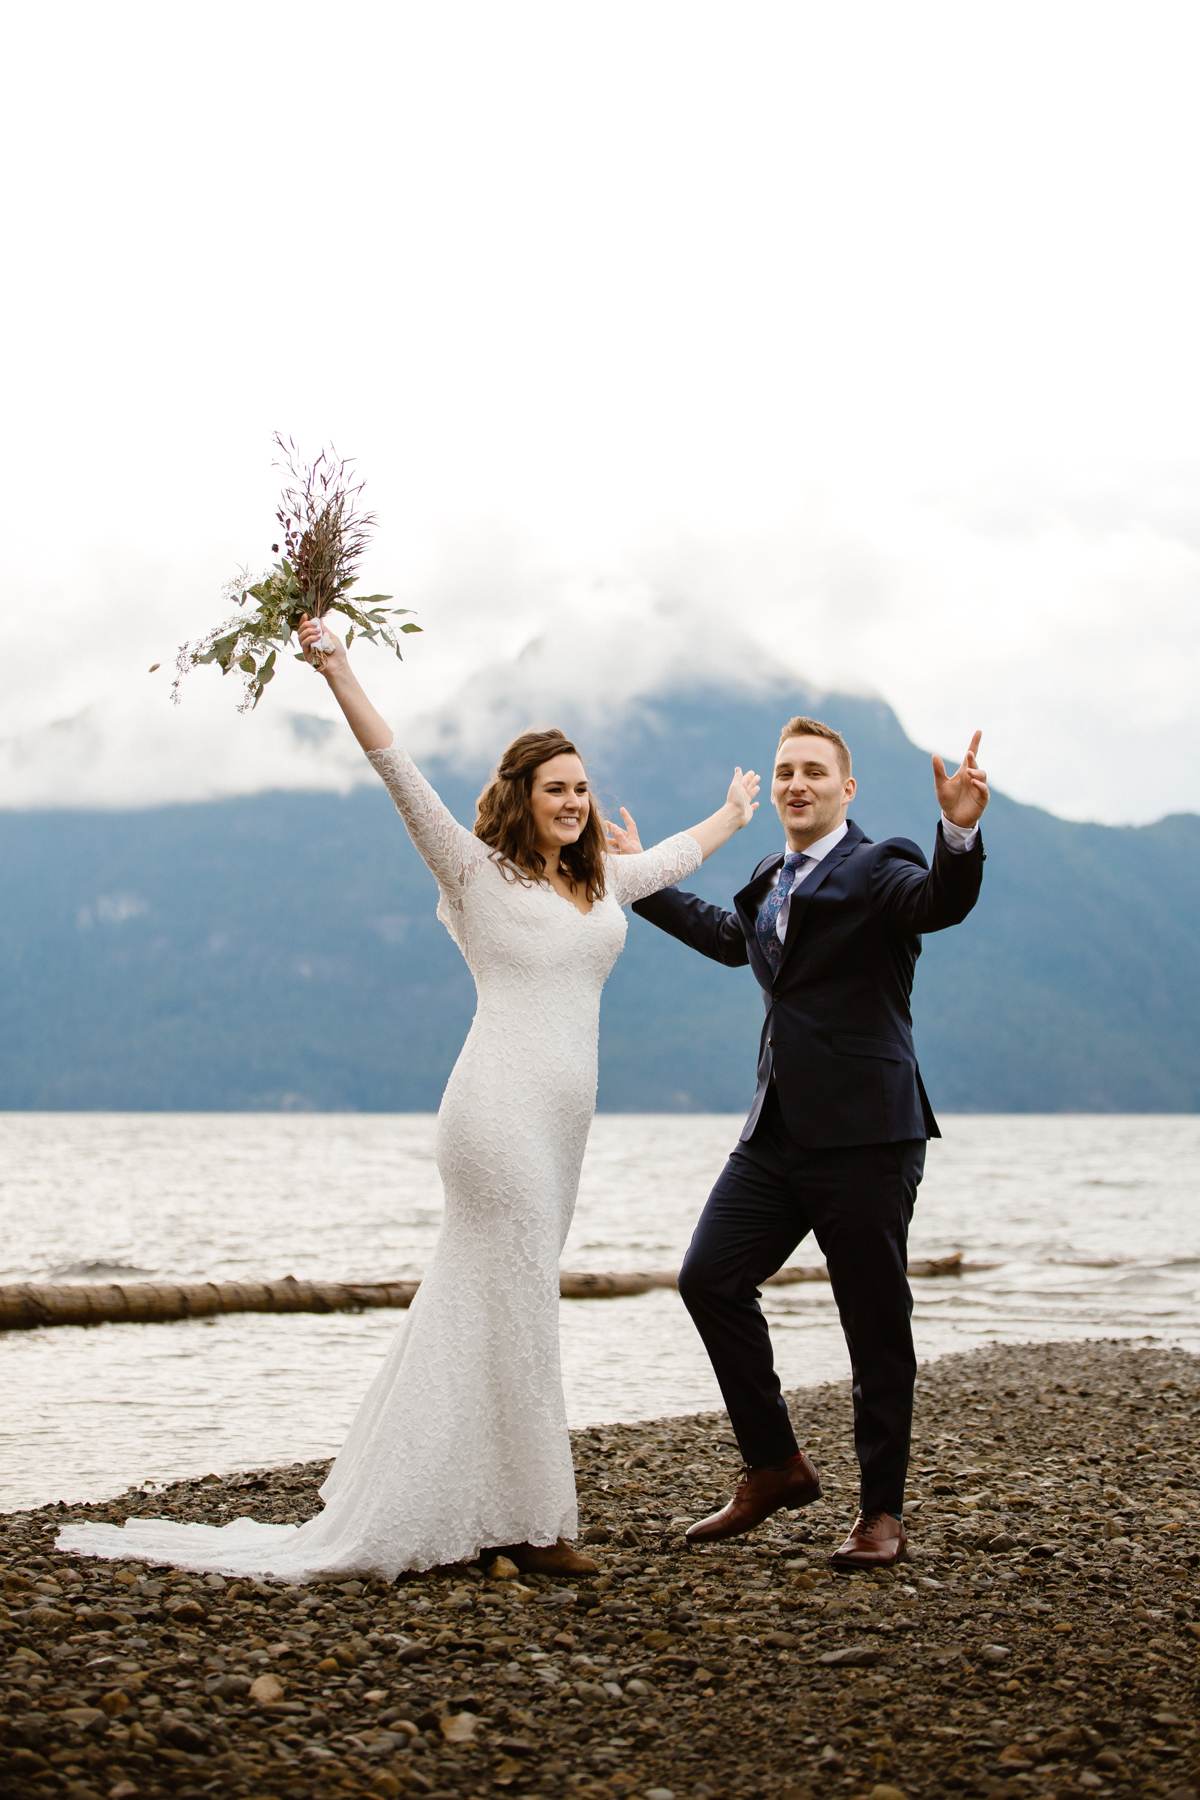 Squamish Wedding Photographers at an Adventurous Elopement - Image 15